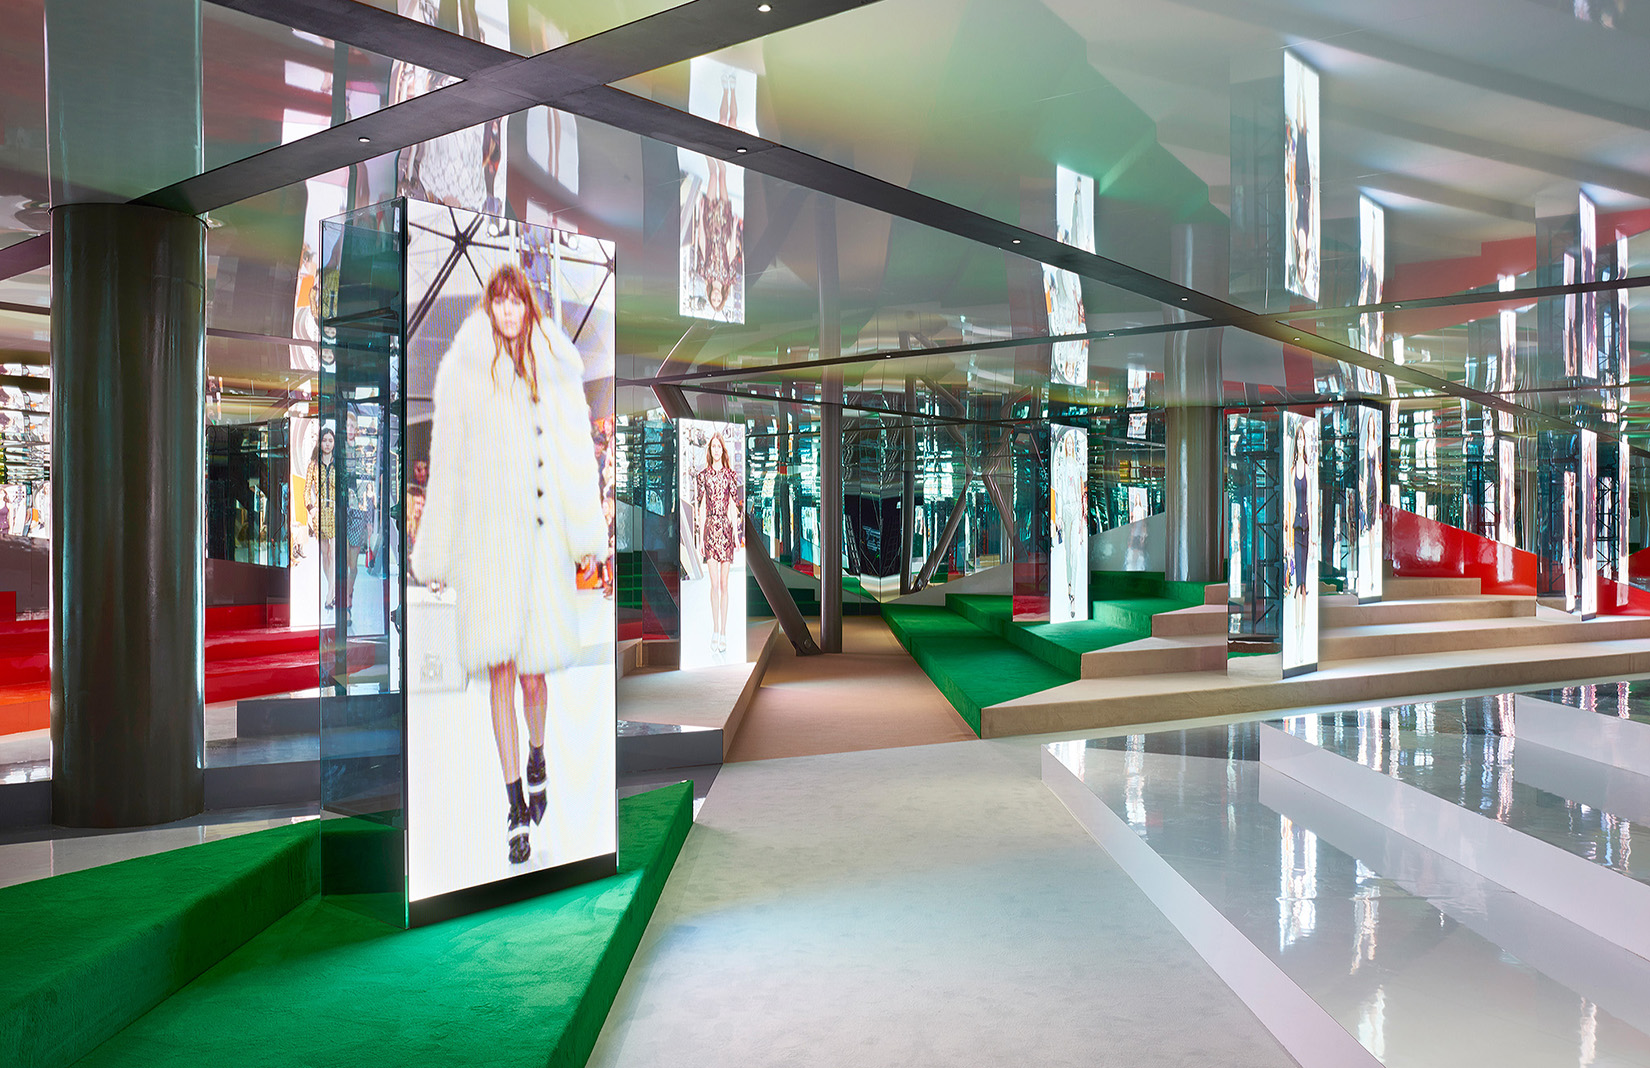 Louis Vuitton Series 3 Exhibition